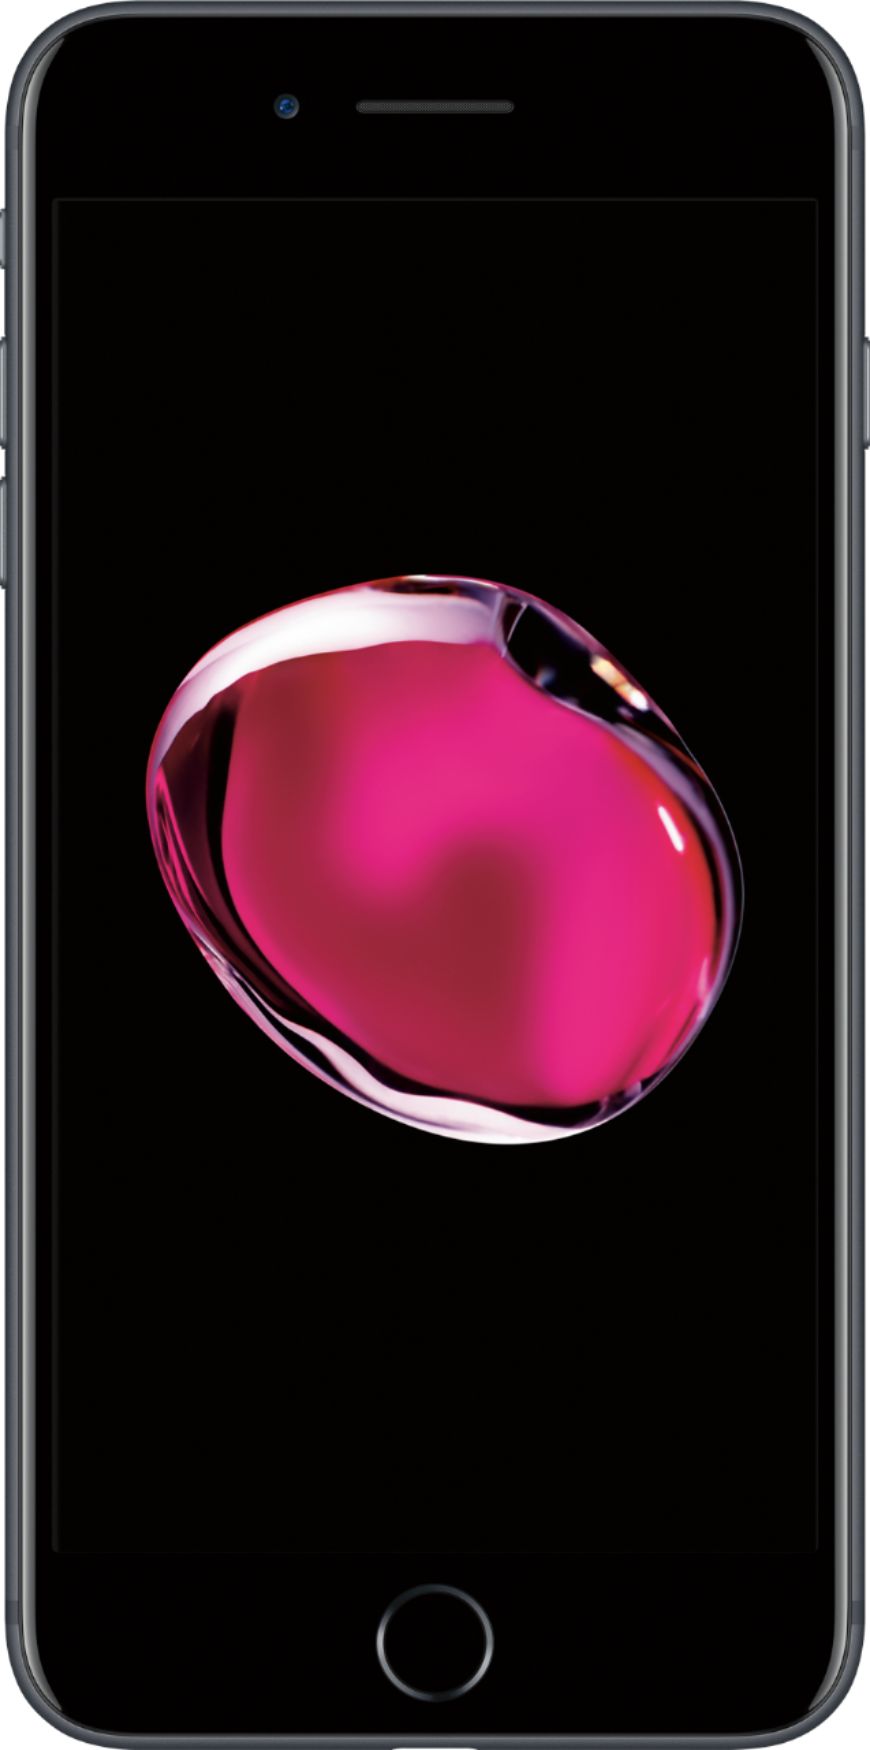 Apple iPhone 7 Plus 32GB Black (Sprint) MNQH2LL/A - Best Buy